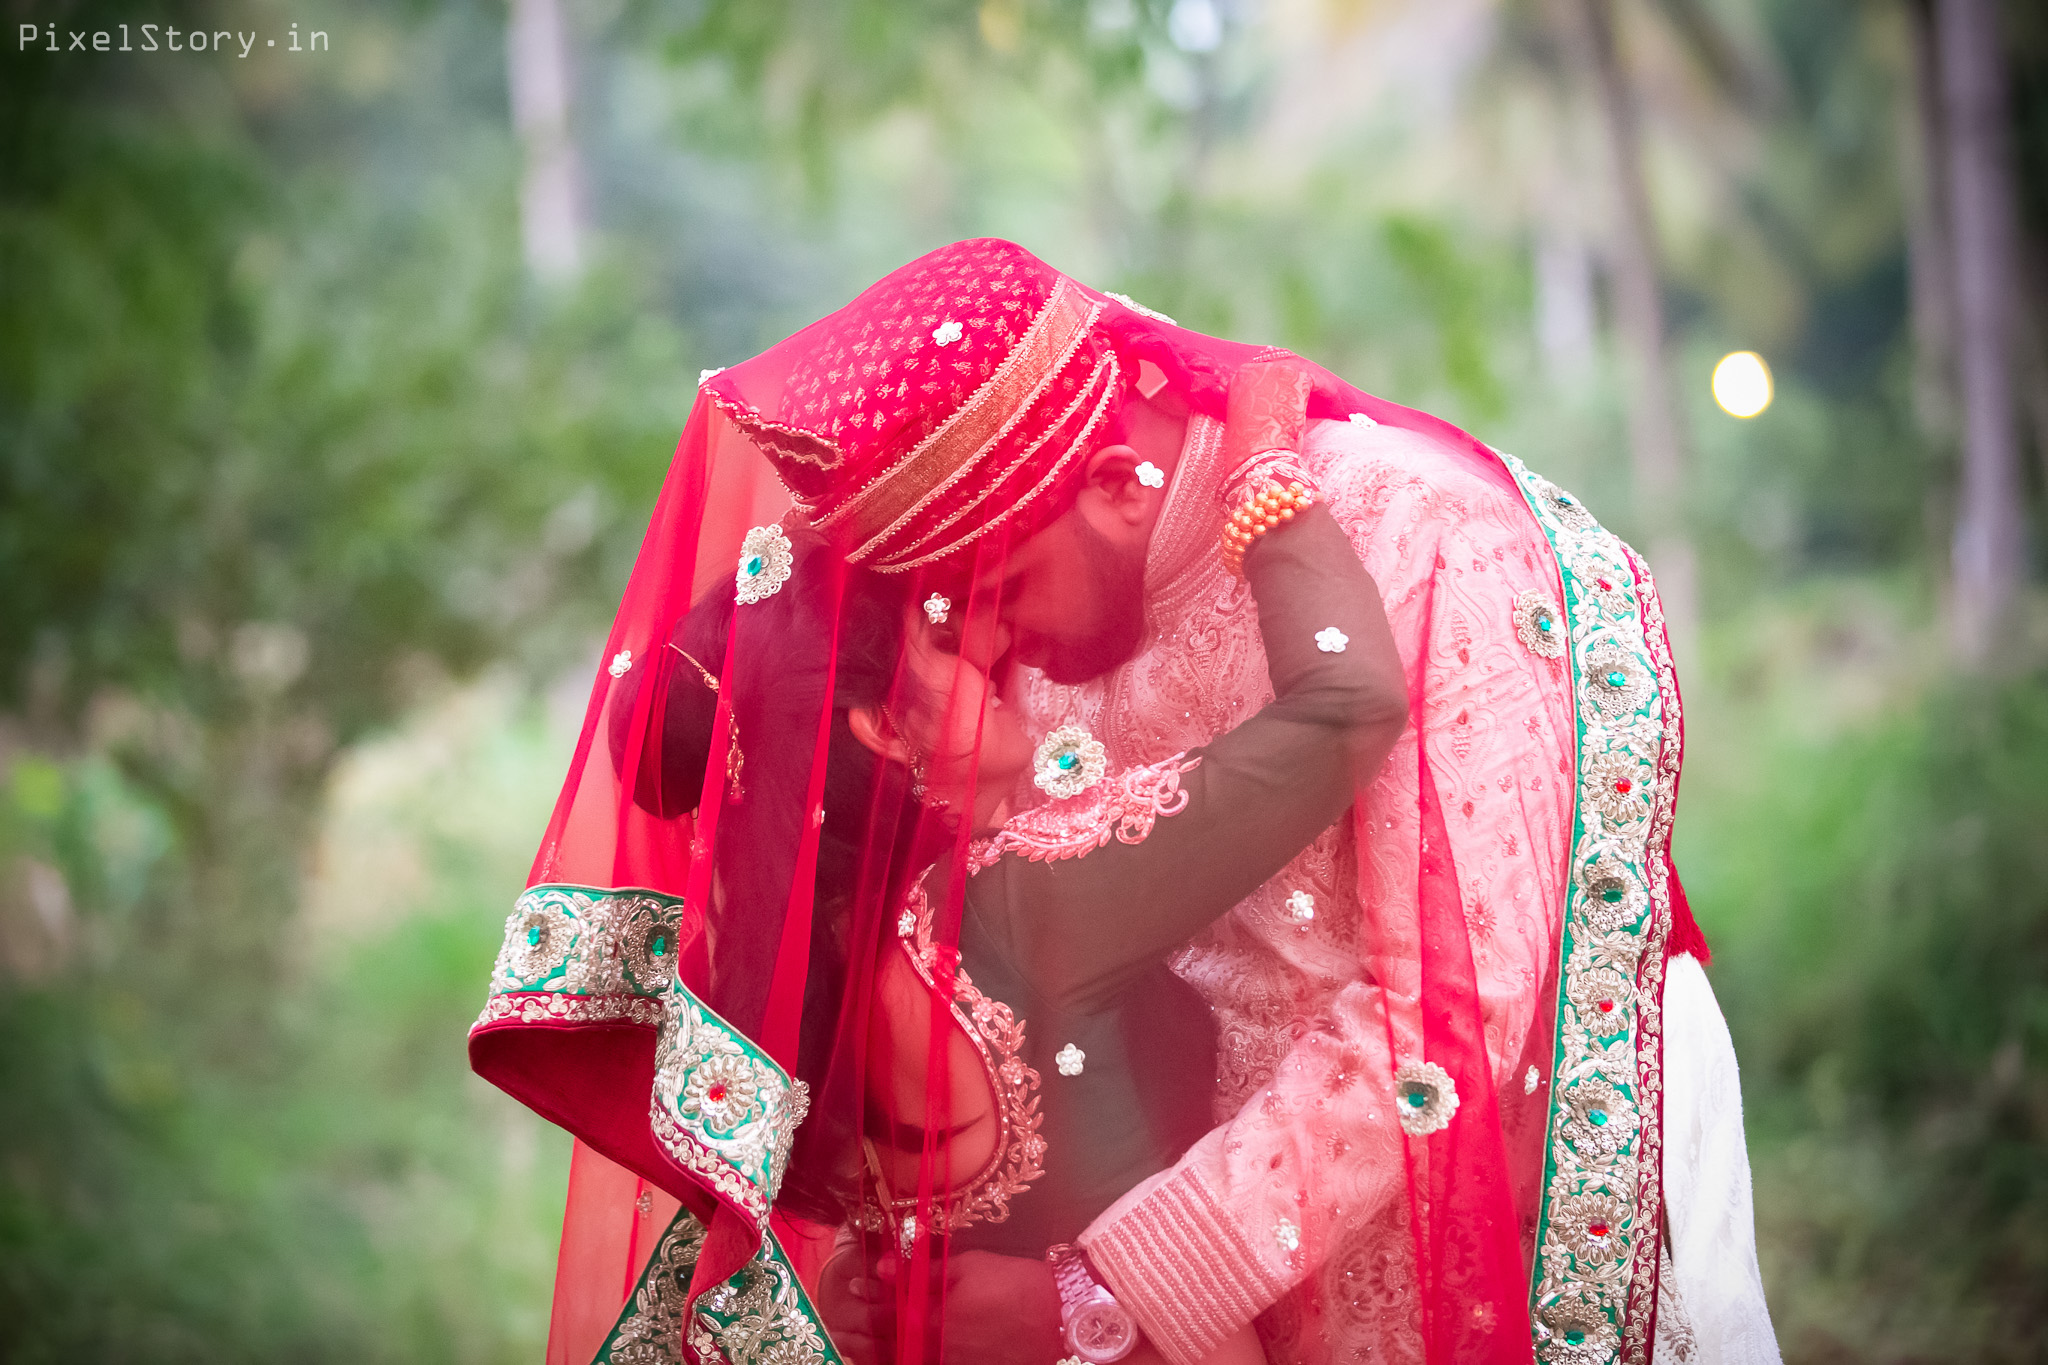 San Francisco City Hall Indian Wedding Shoot | Yasmeen and Rohit | Indian  wedding photography couples, Indian wedding couple, Indian bride  photography poses